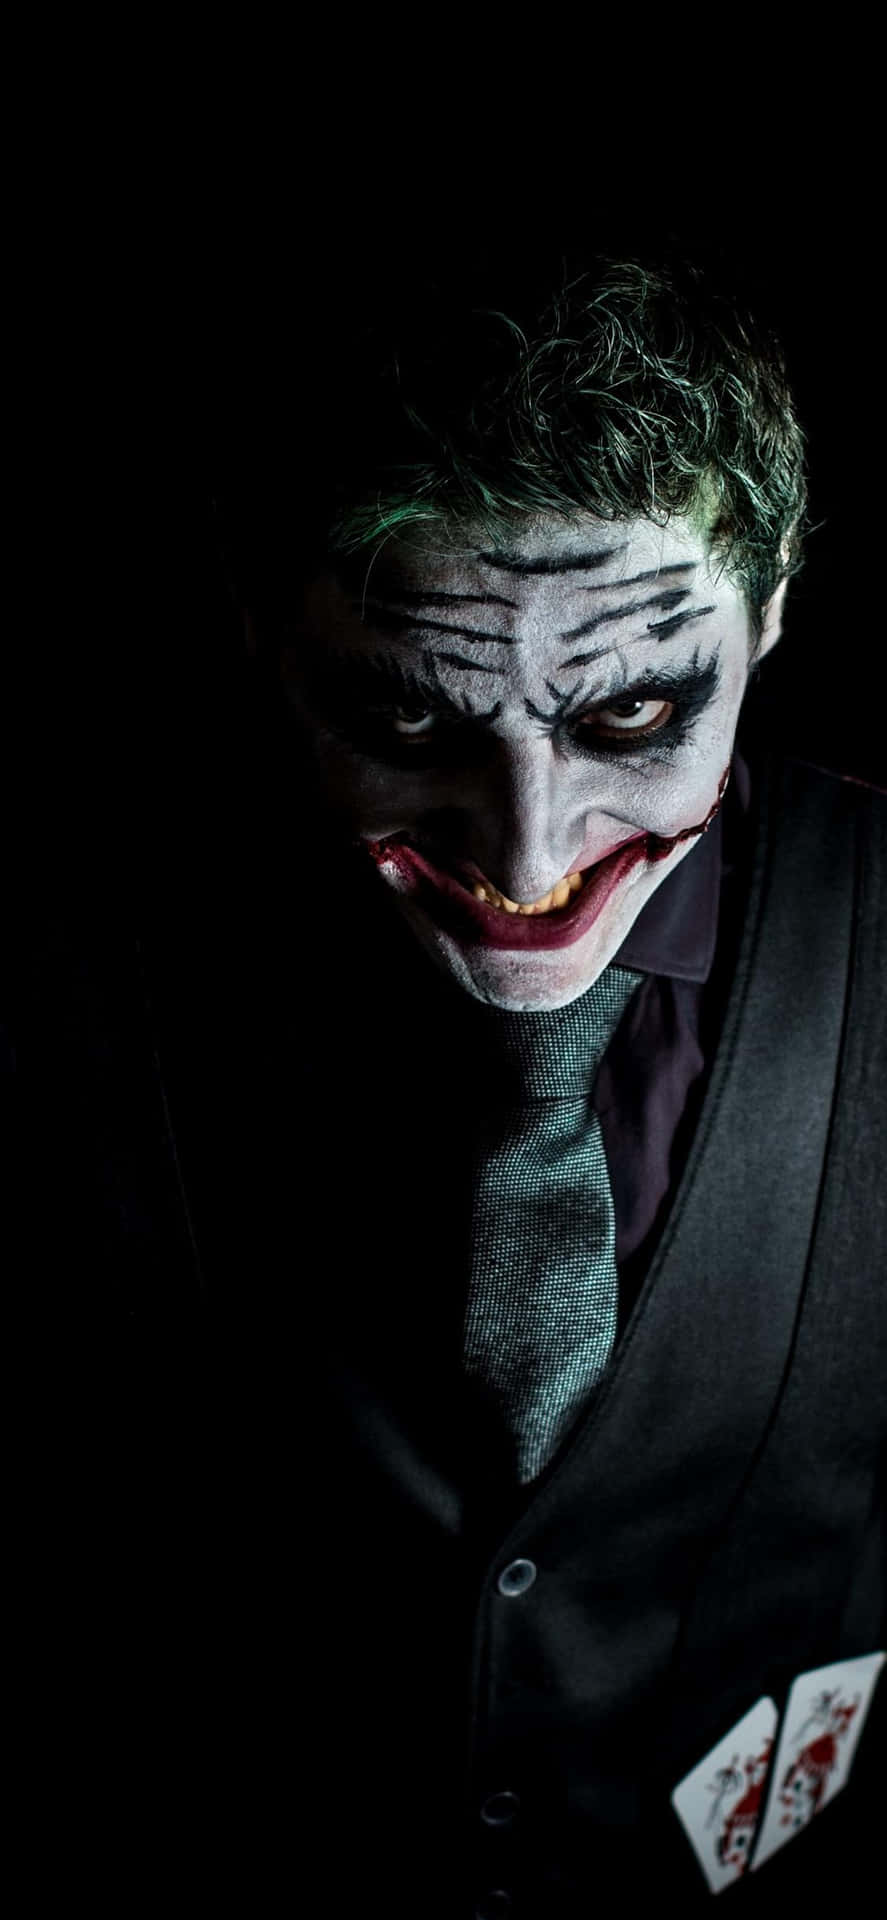 Unleash Your Dark Side - Intense Dark Joker Image Wallpaper